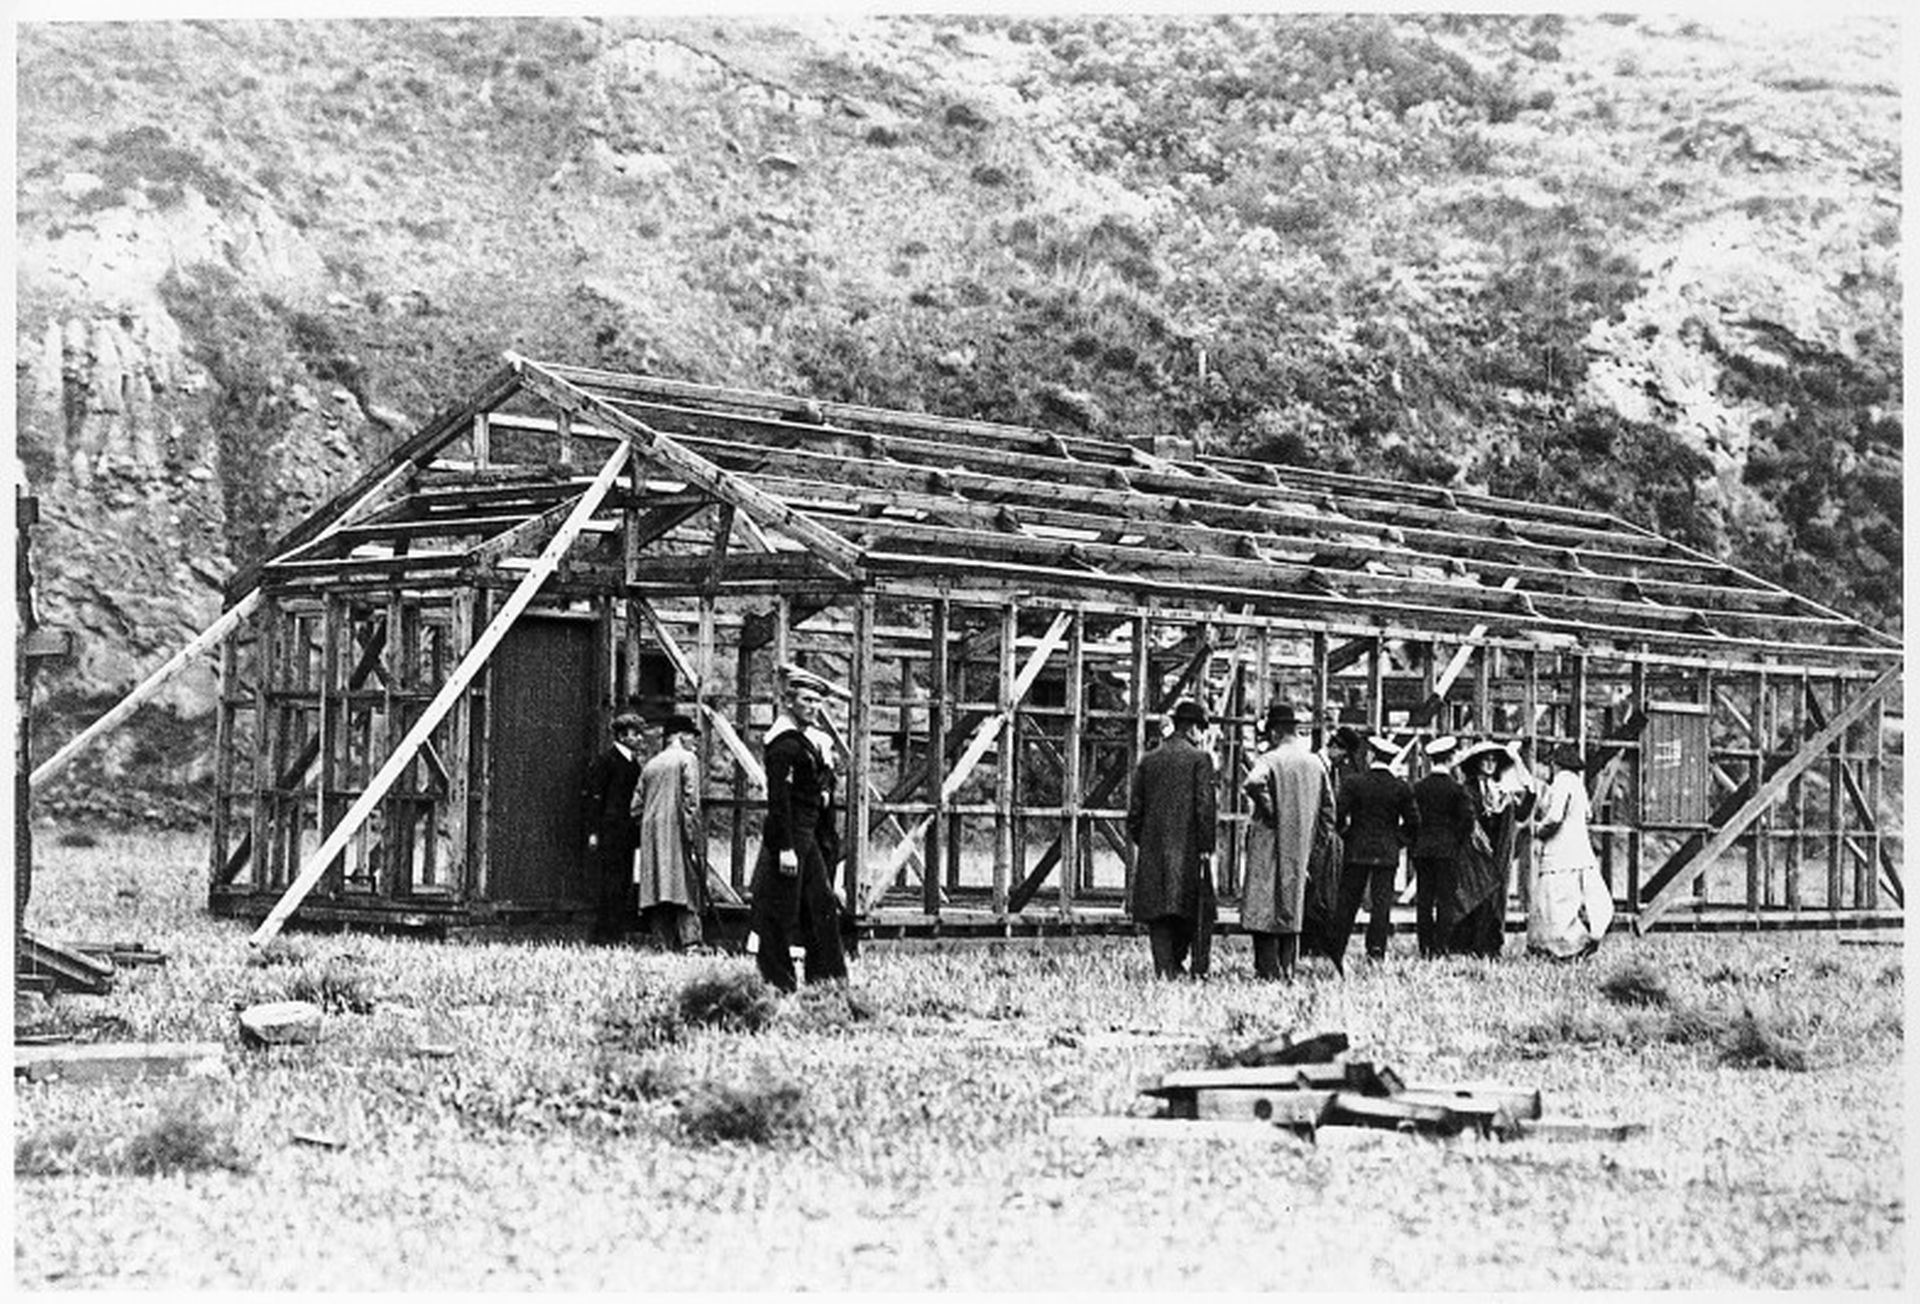 Trial erection of the Terra Nova hut in Lyttelton